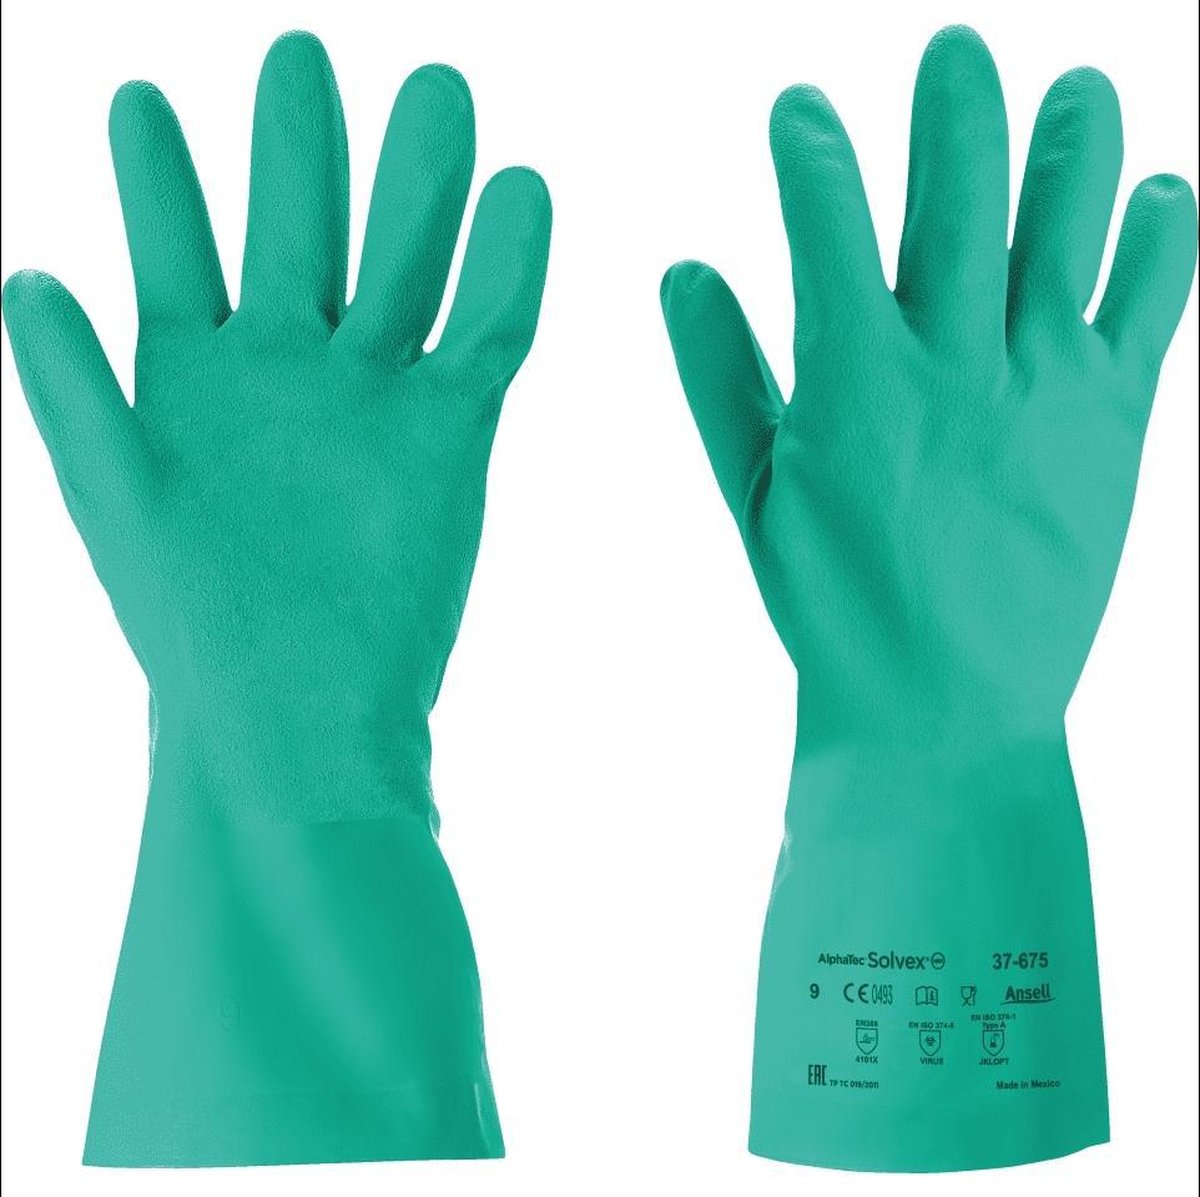 Chemisch bestendige handschoen Ansell Sol-Vex® 37-675, verschillende maten 7 (S)